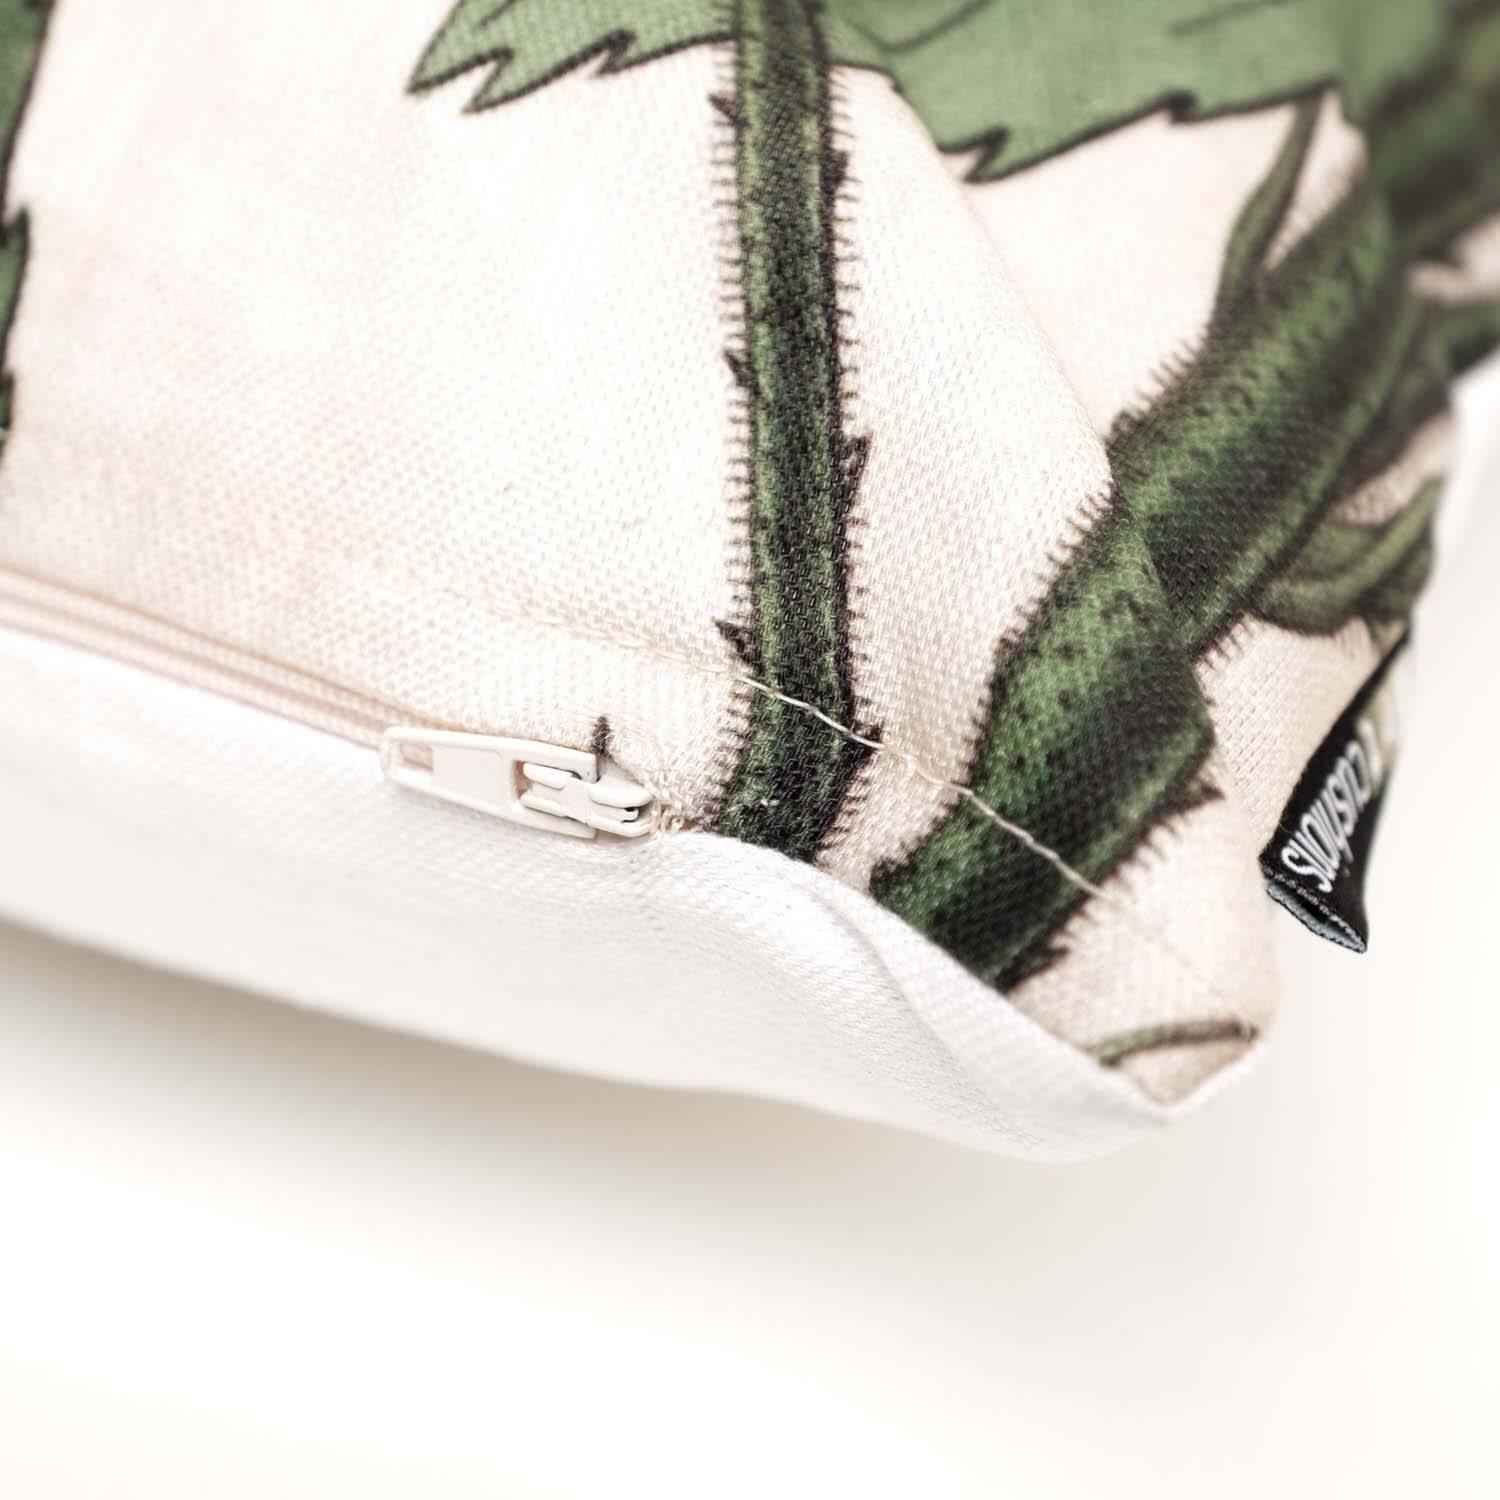 Palm Pattern III - Art Print Cushion - Handmade Cushions UK - WeLoveCushions